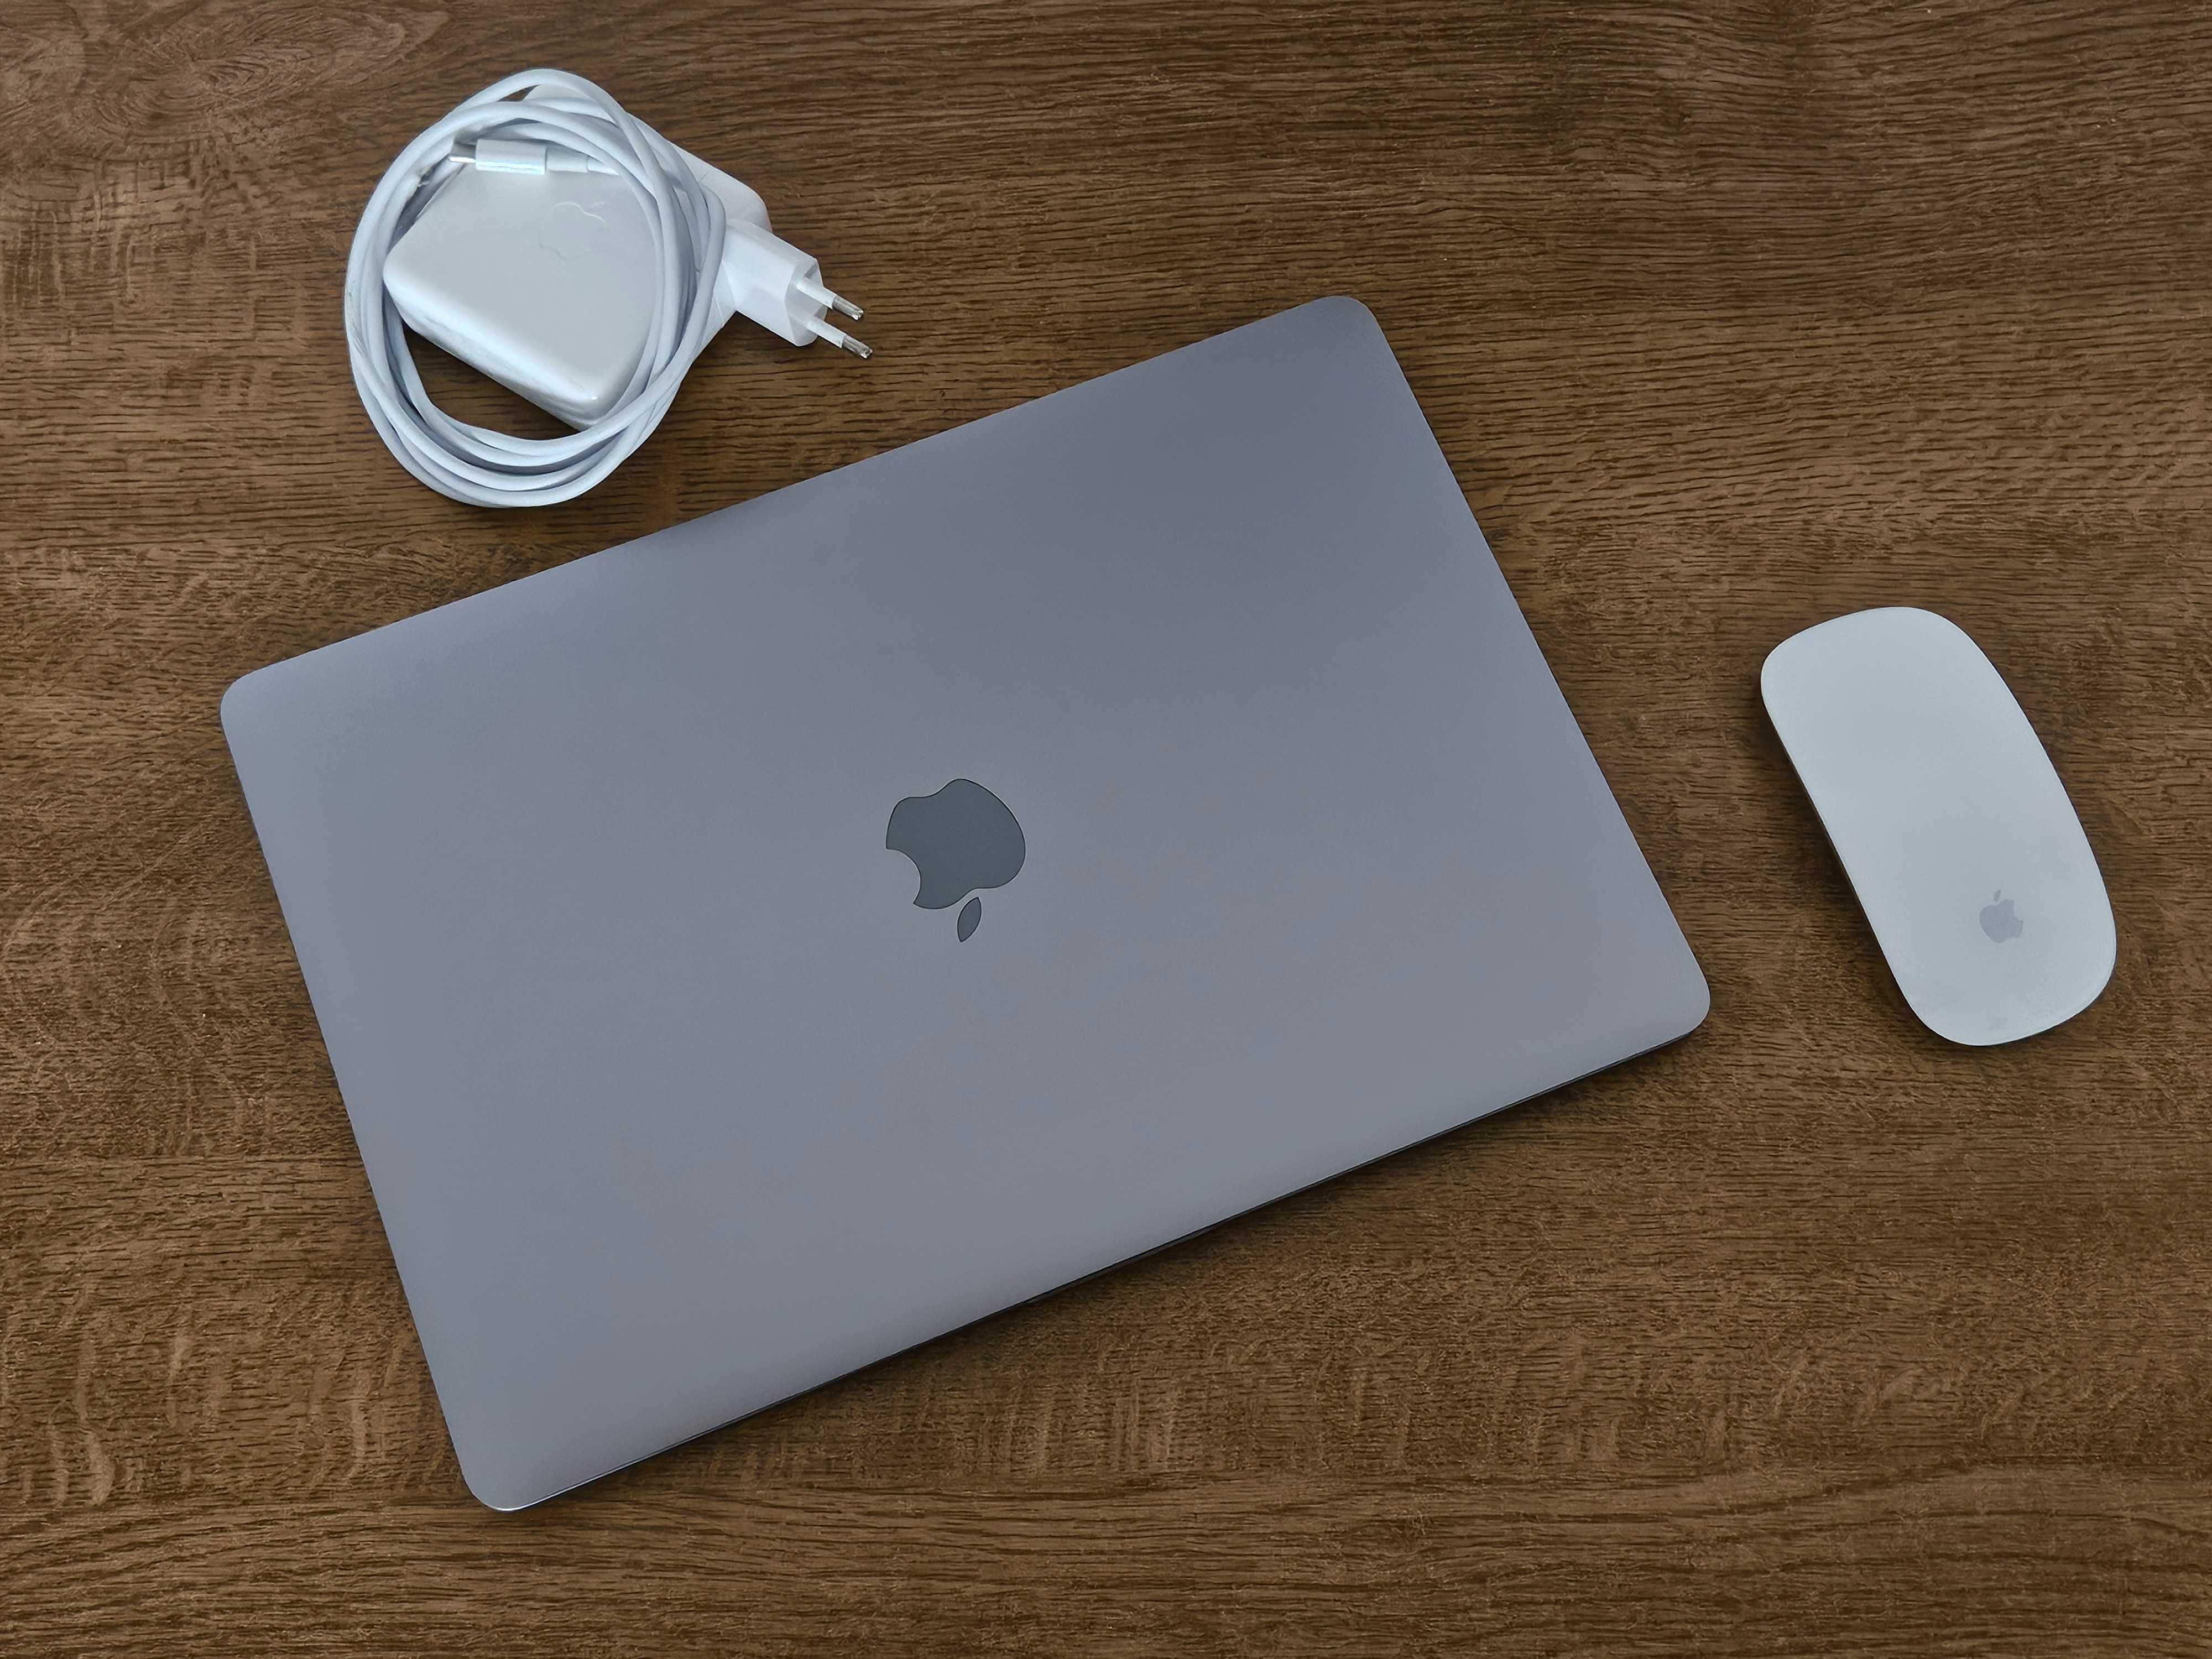 Продам MacBook Pro M1, + Мышь Apple Magic Mouse